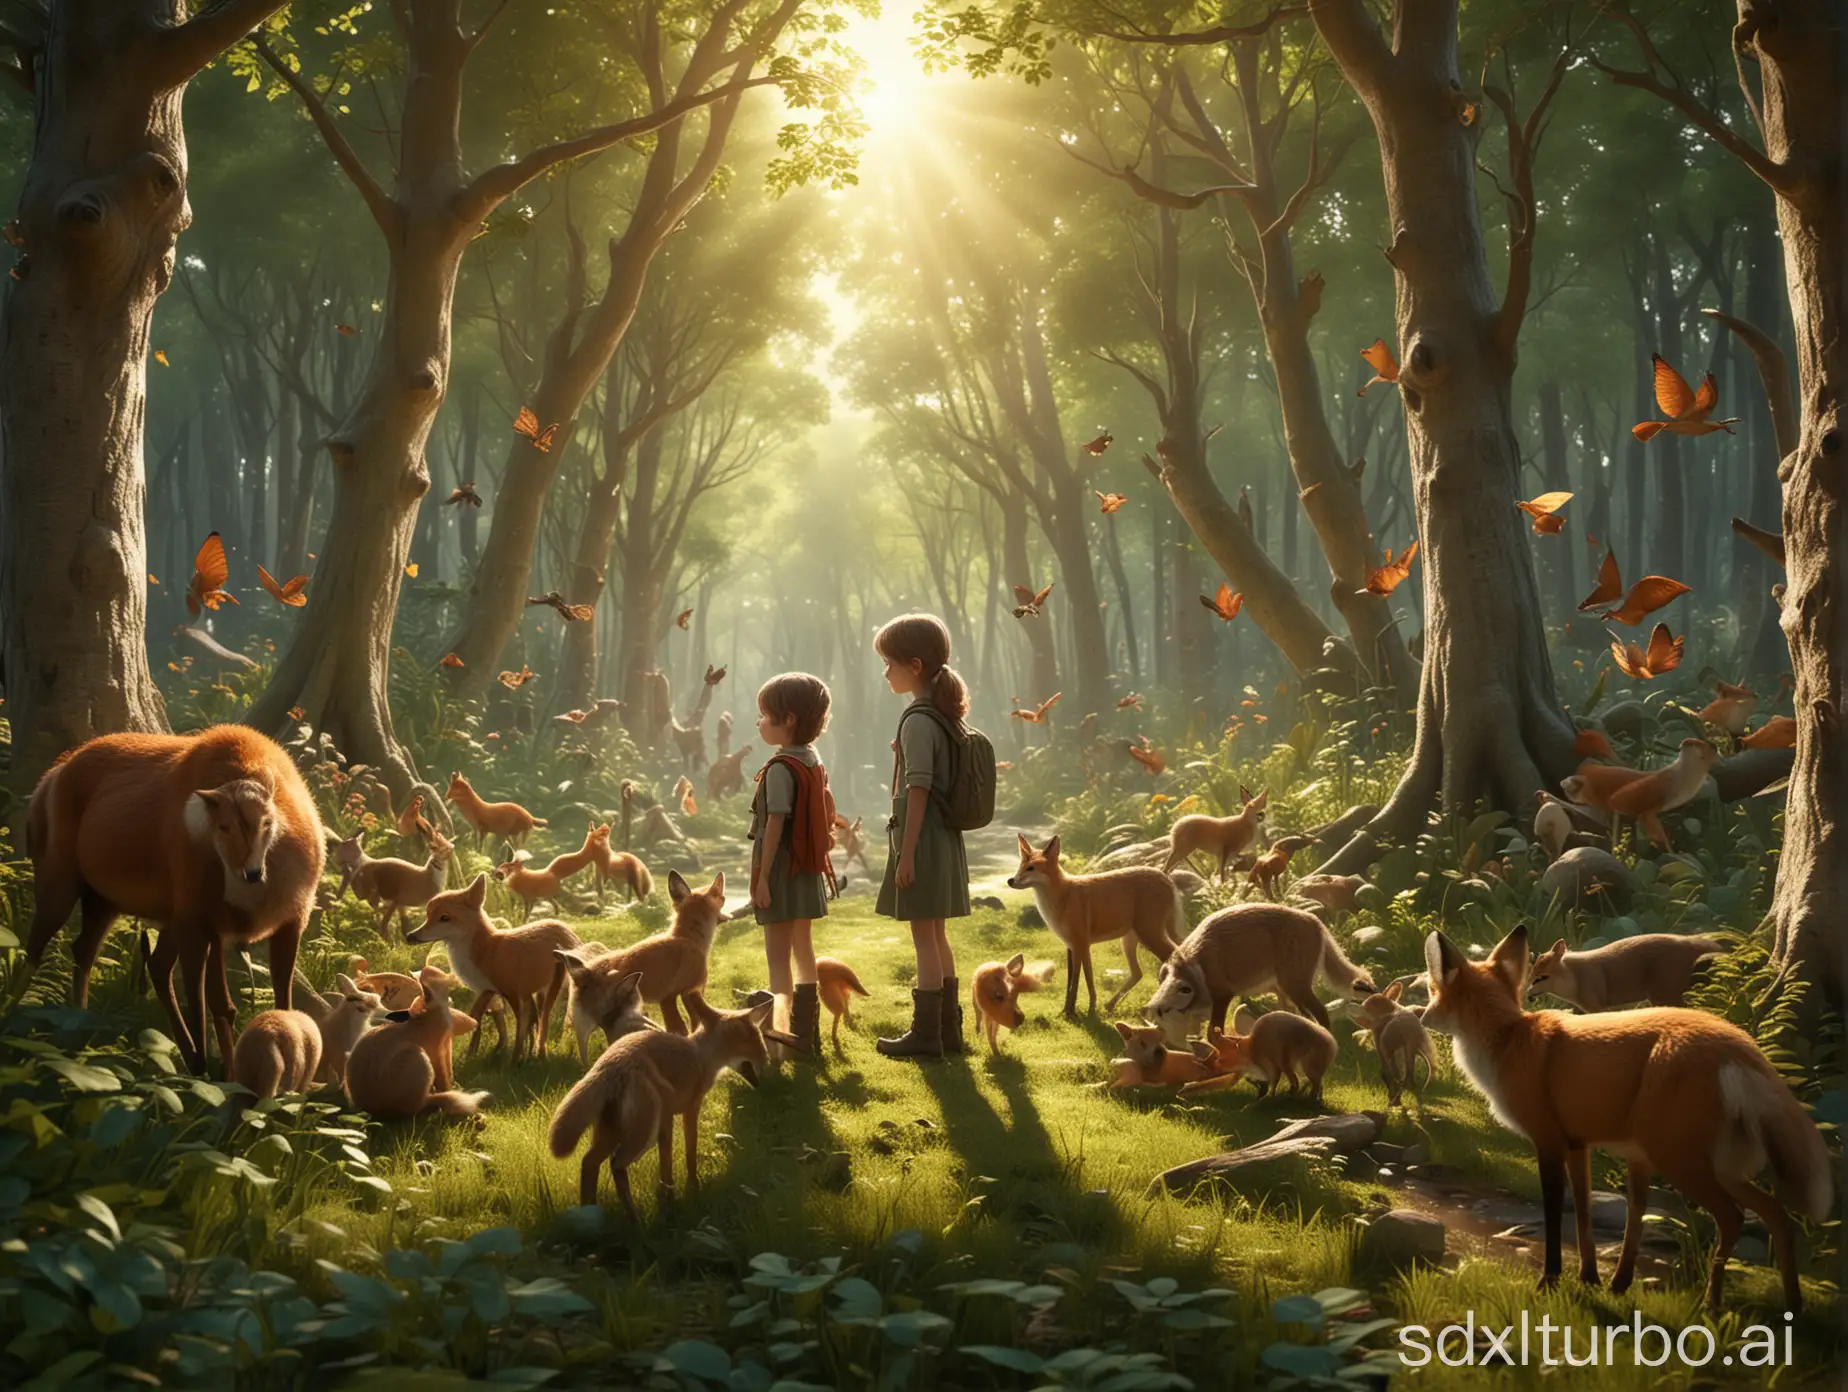 Children-Bonding-with-Forest-Animals-in-Enchanting-3D-Render